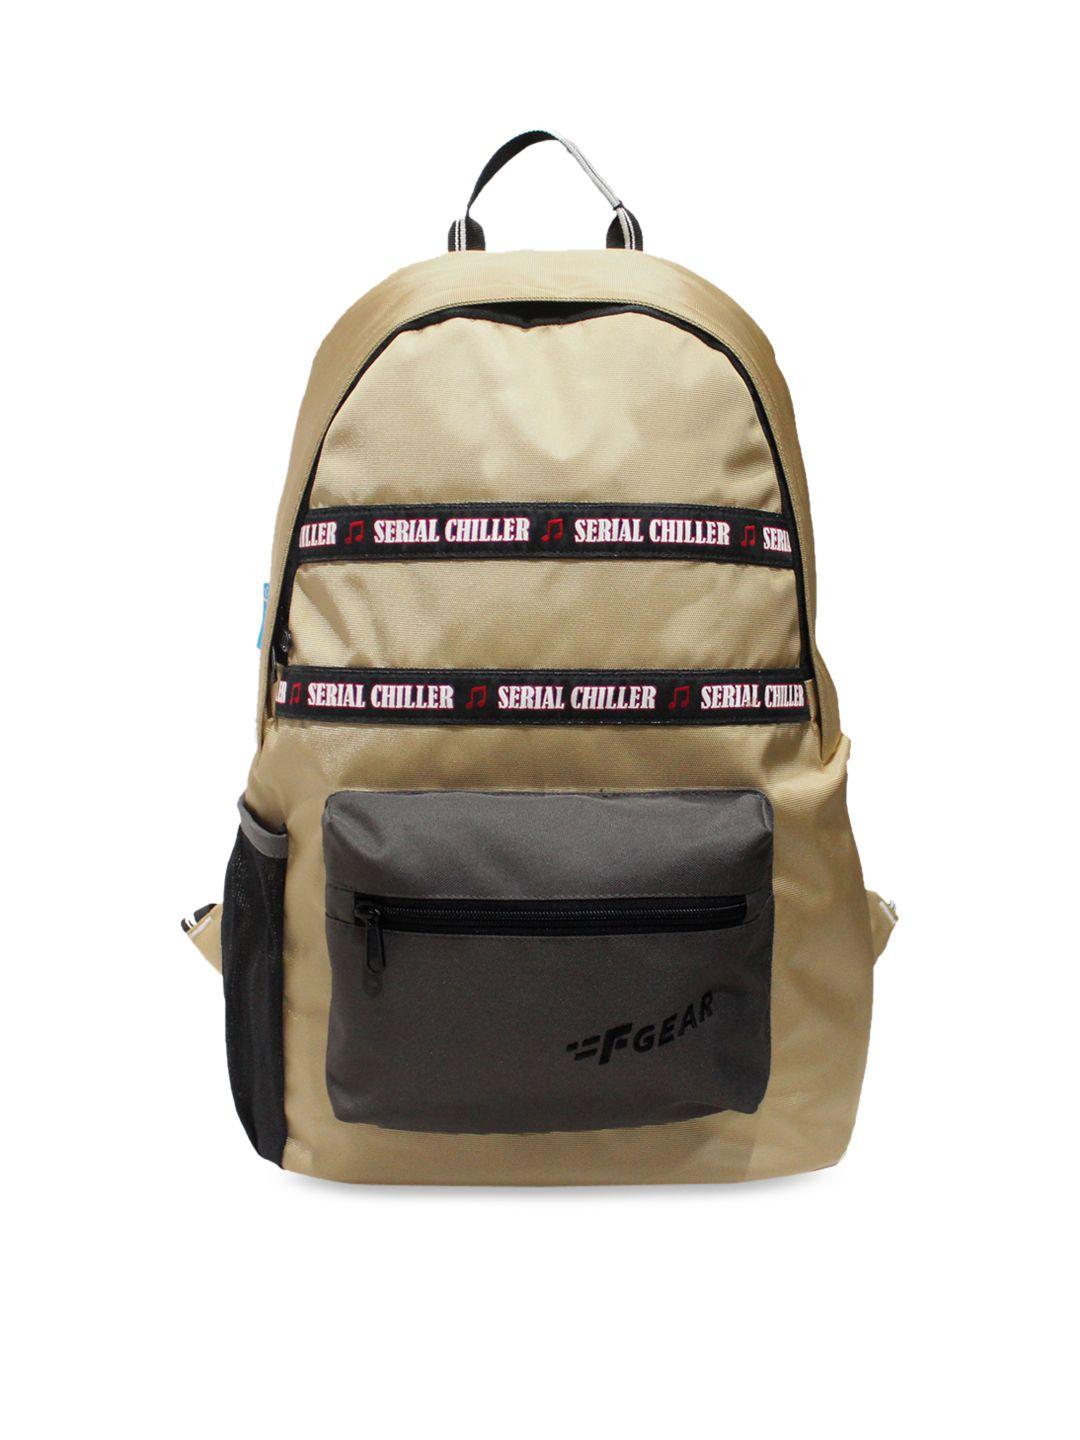 f gear unisex beige & charcoal colourblocked backpack